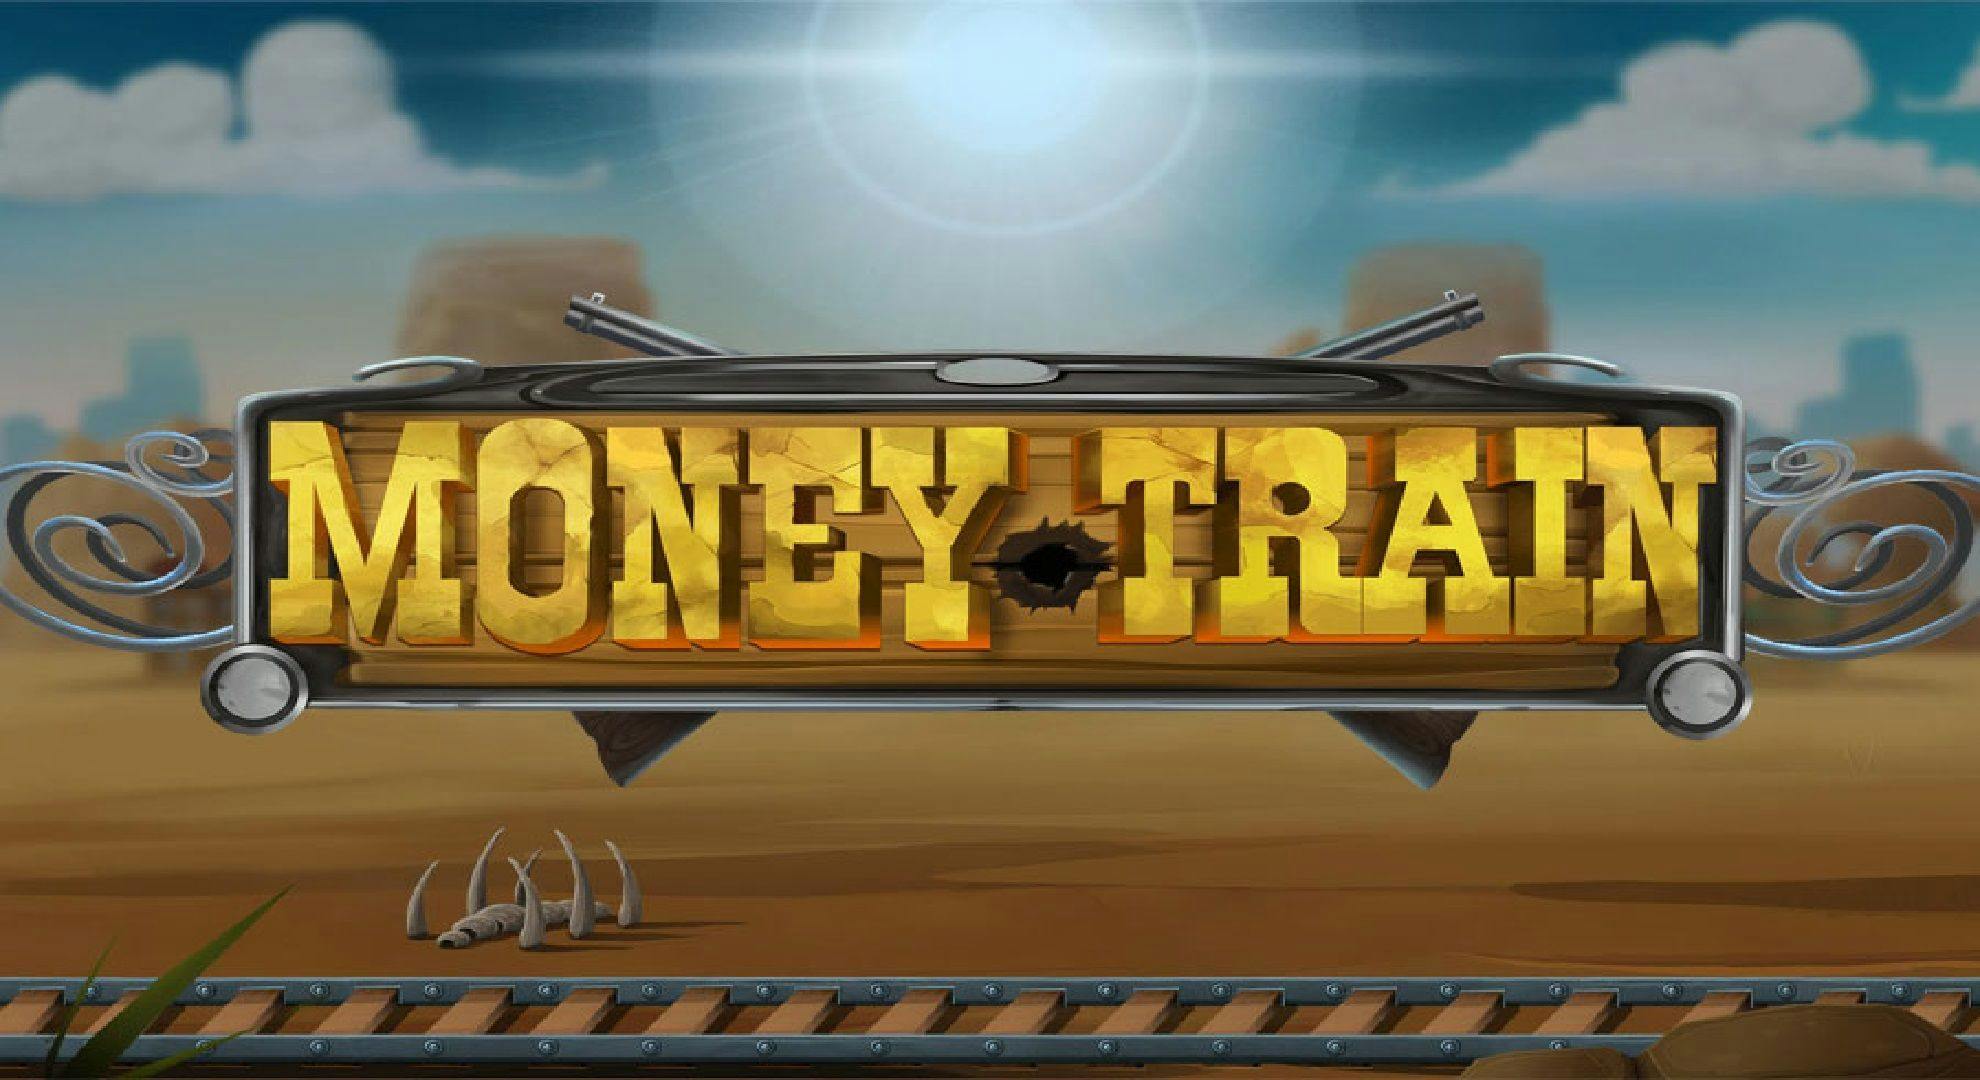 Money Train Slot Online Free Play